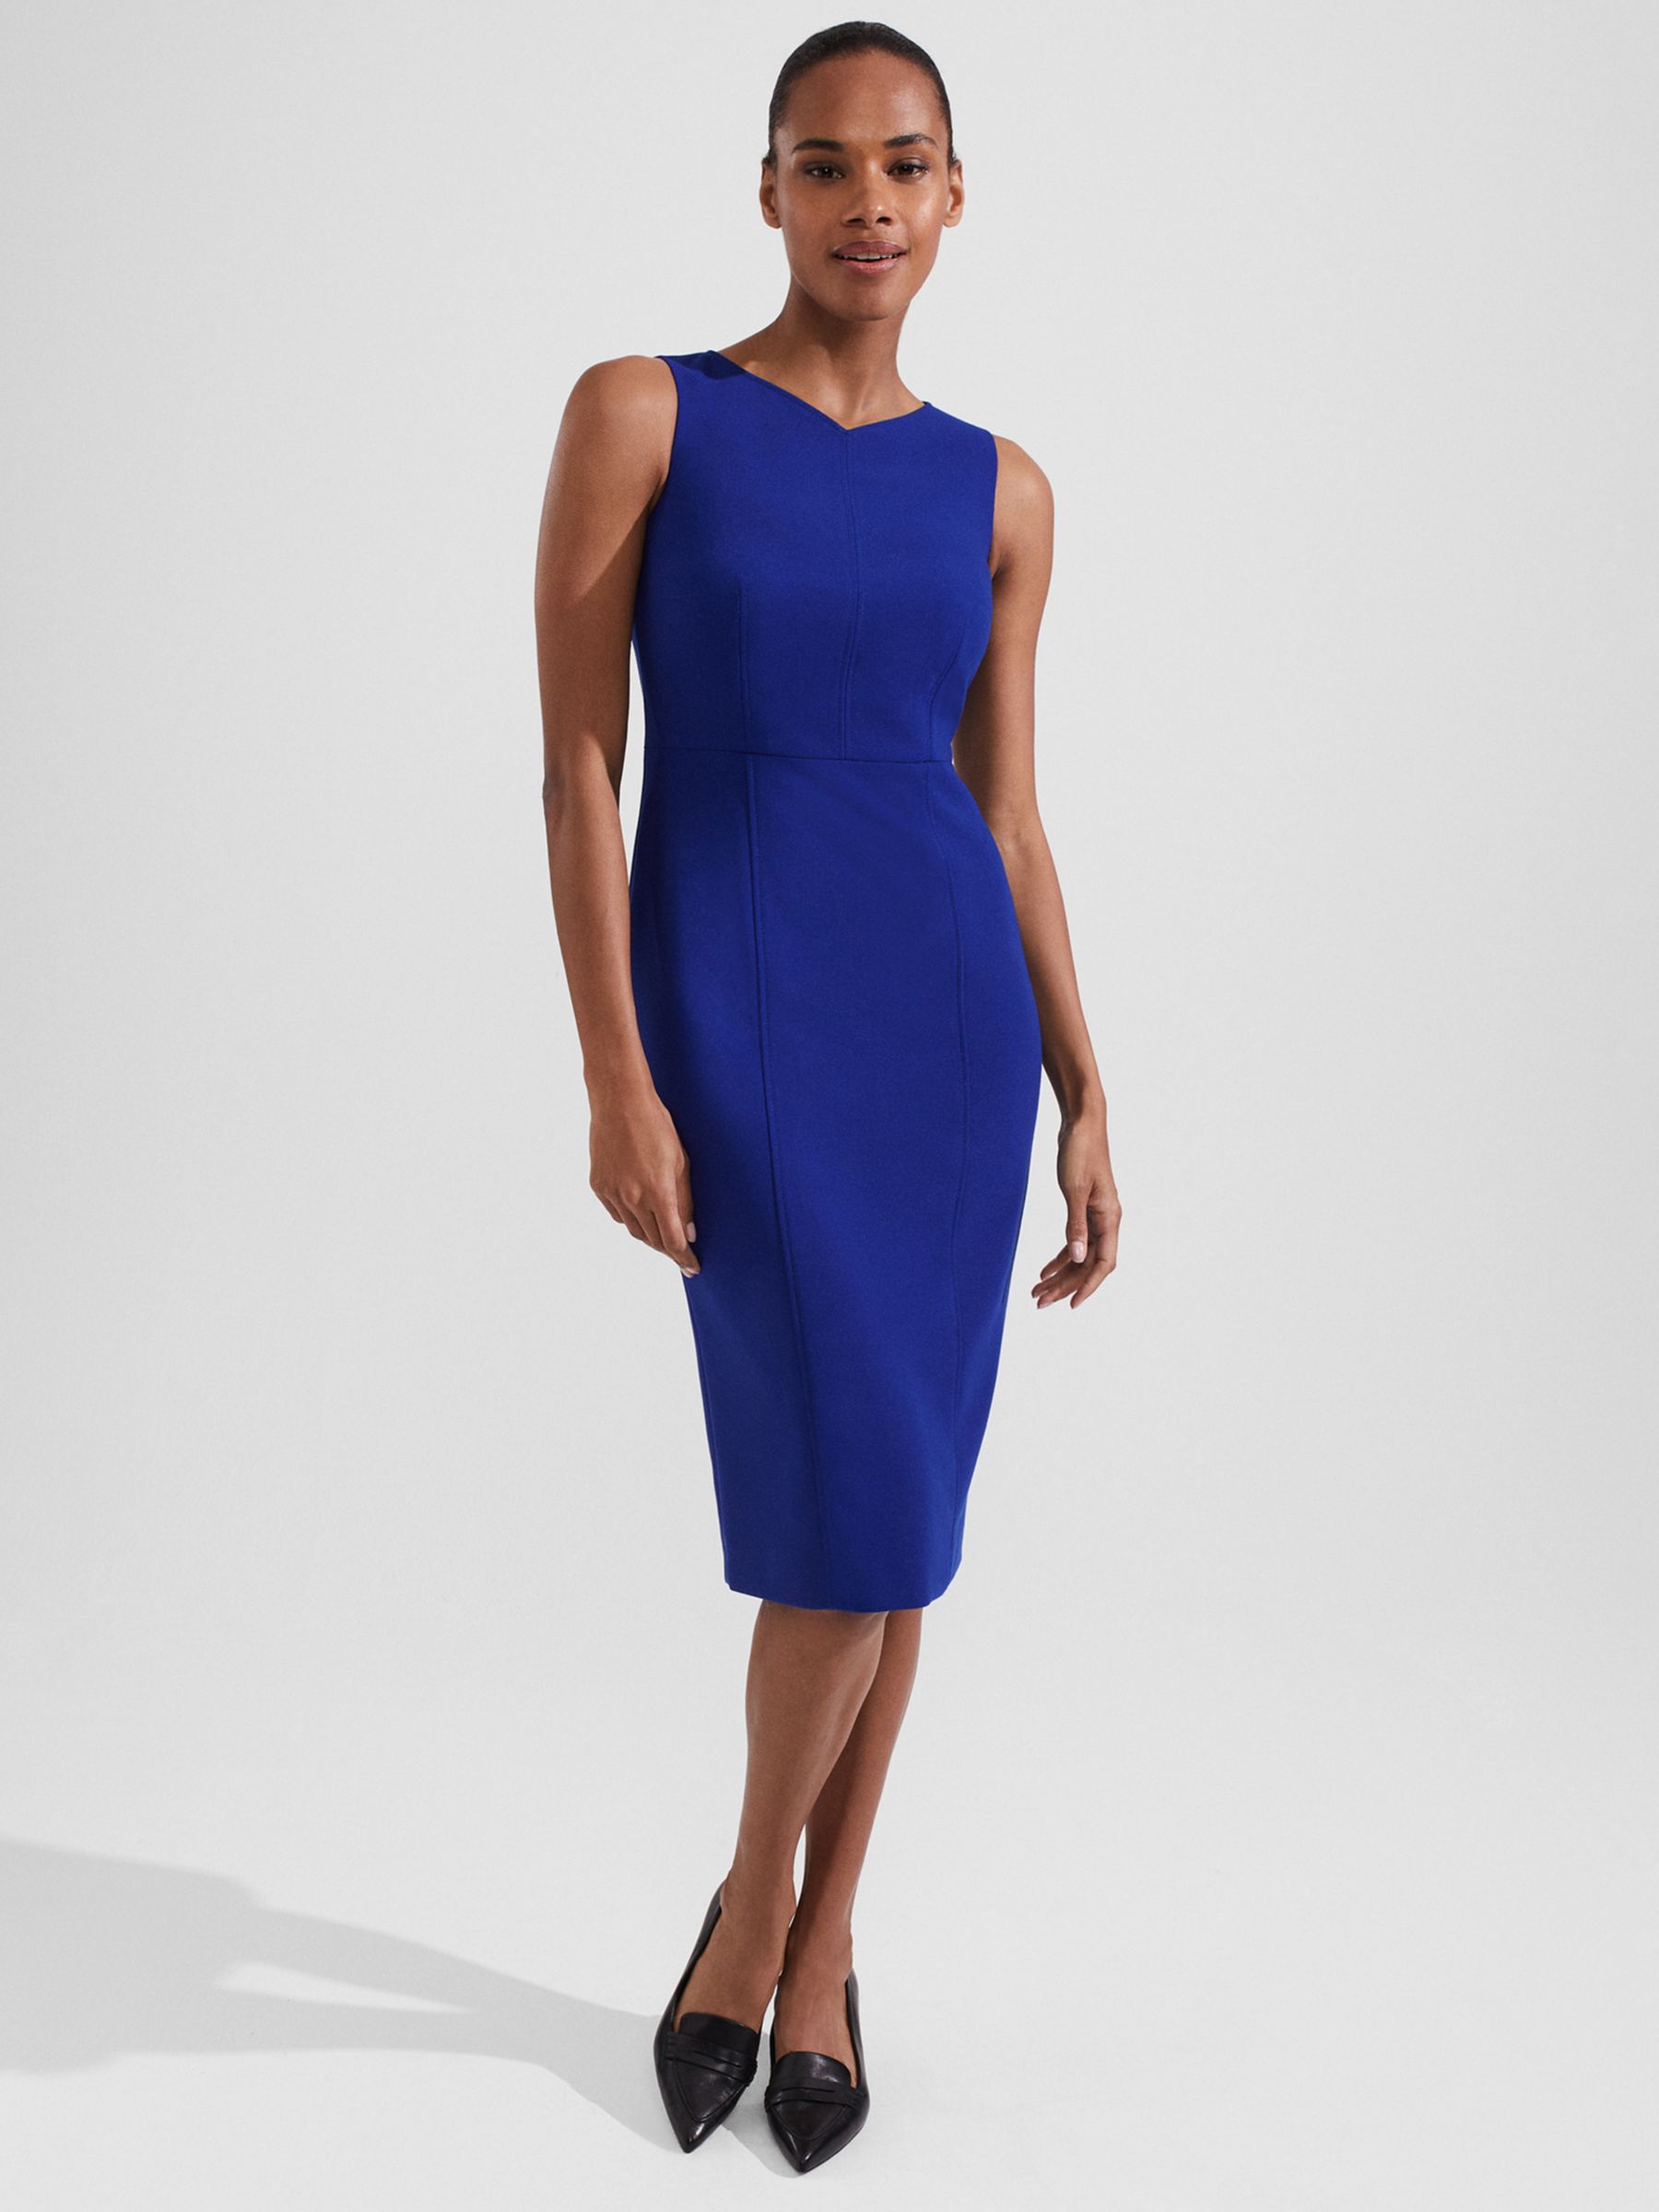 Hobbs Silvia Pencil Dress, Cobalt Blue at John Lewis & Partners